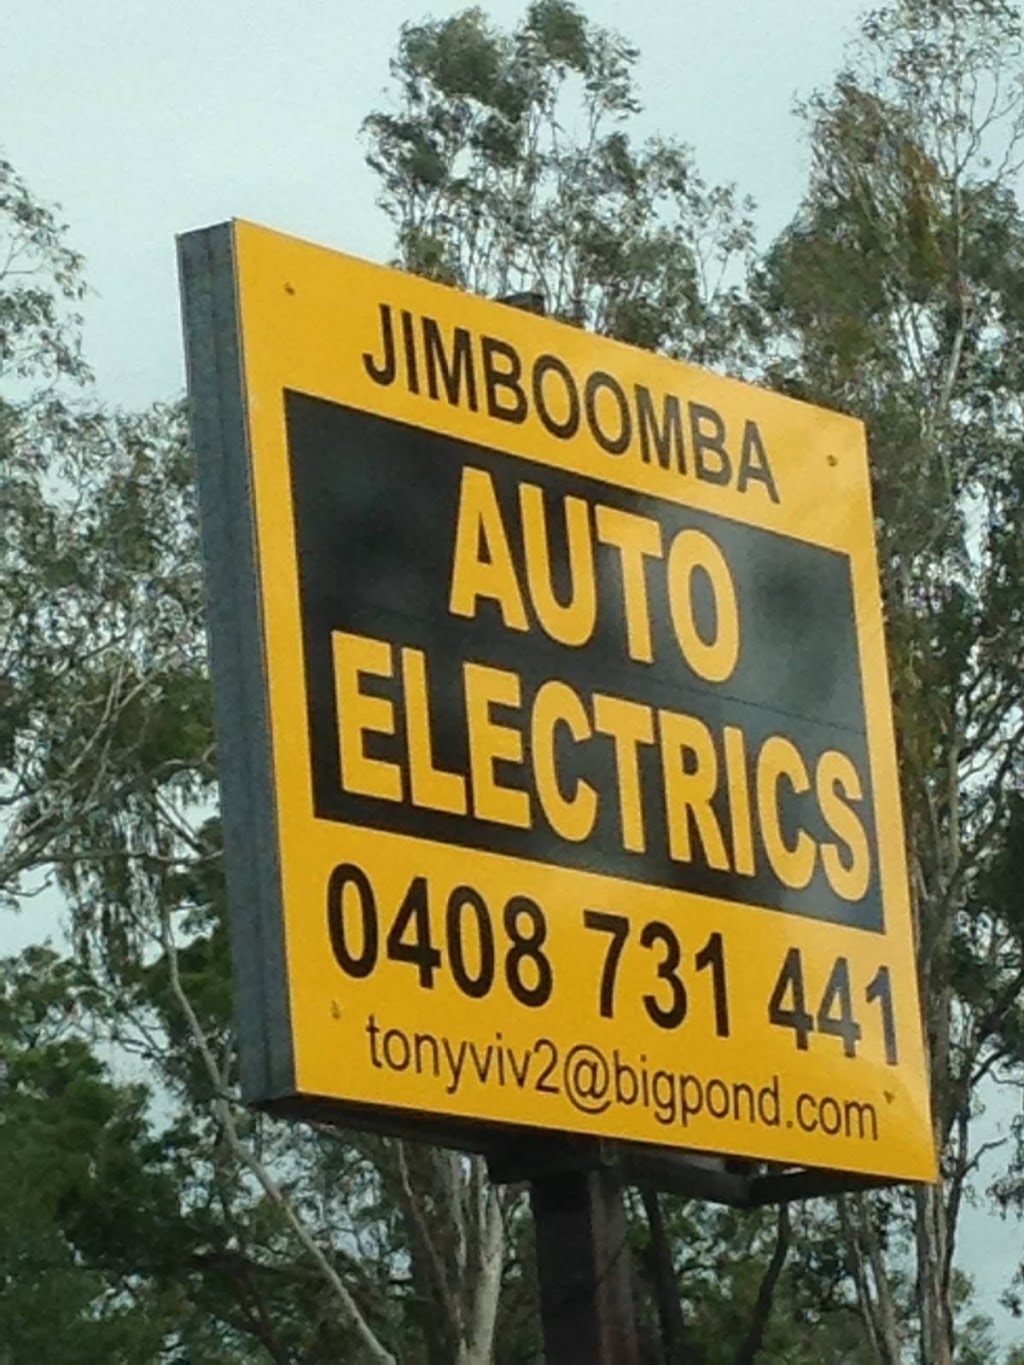 AUTO ELECTRICS ON WHEELS Trading as , Jimboomba Auto Electrics a | car repair | 517 Camp Cable Rd, Jimboomba QLD 4280, Australia | 0408731441 OR +61 408 731 441